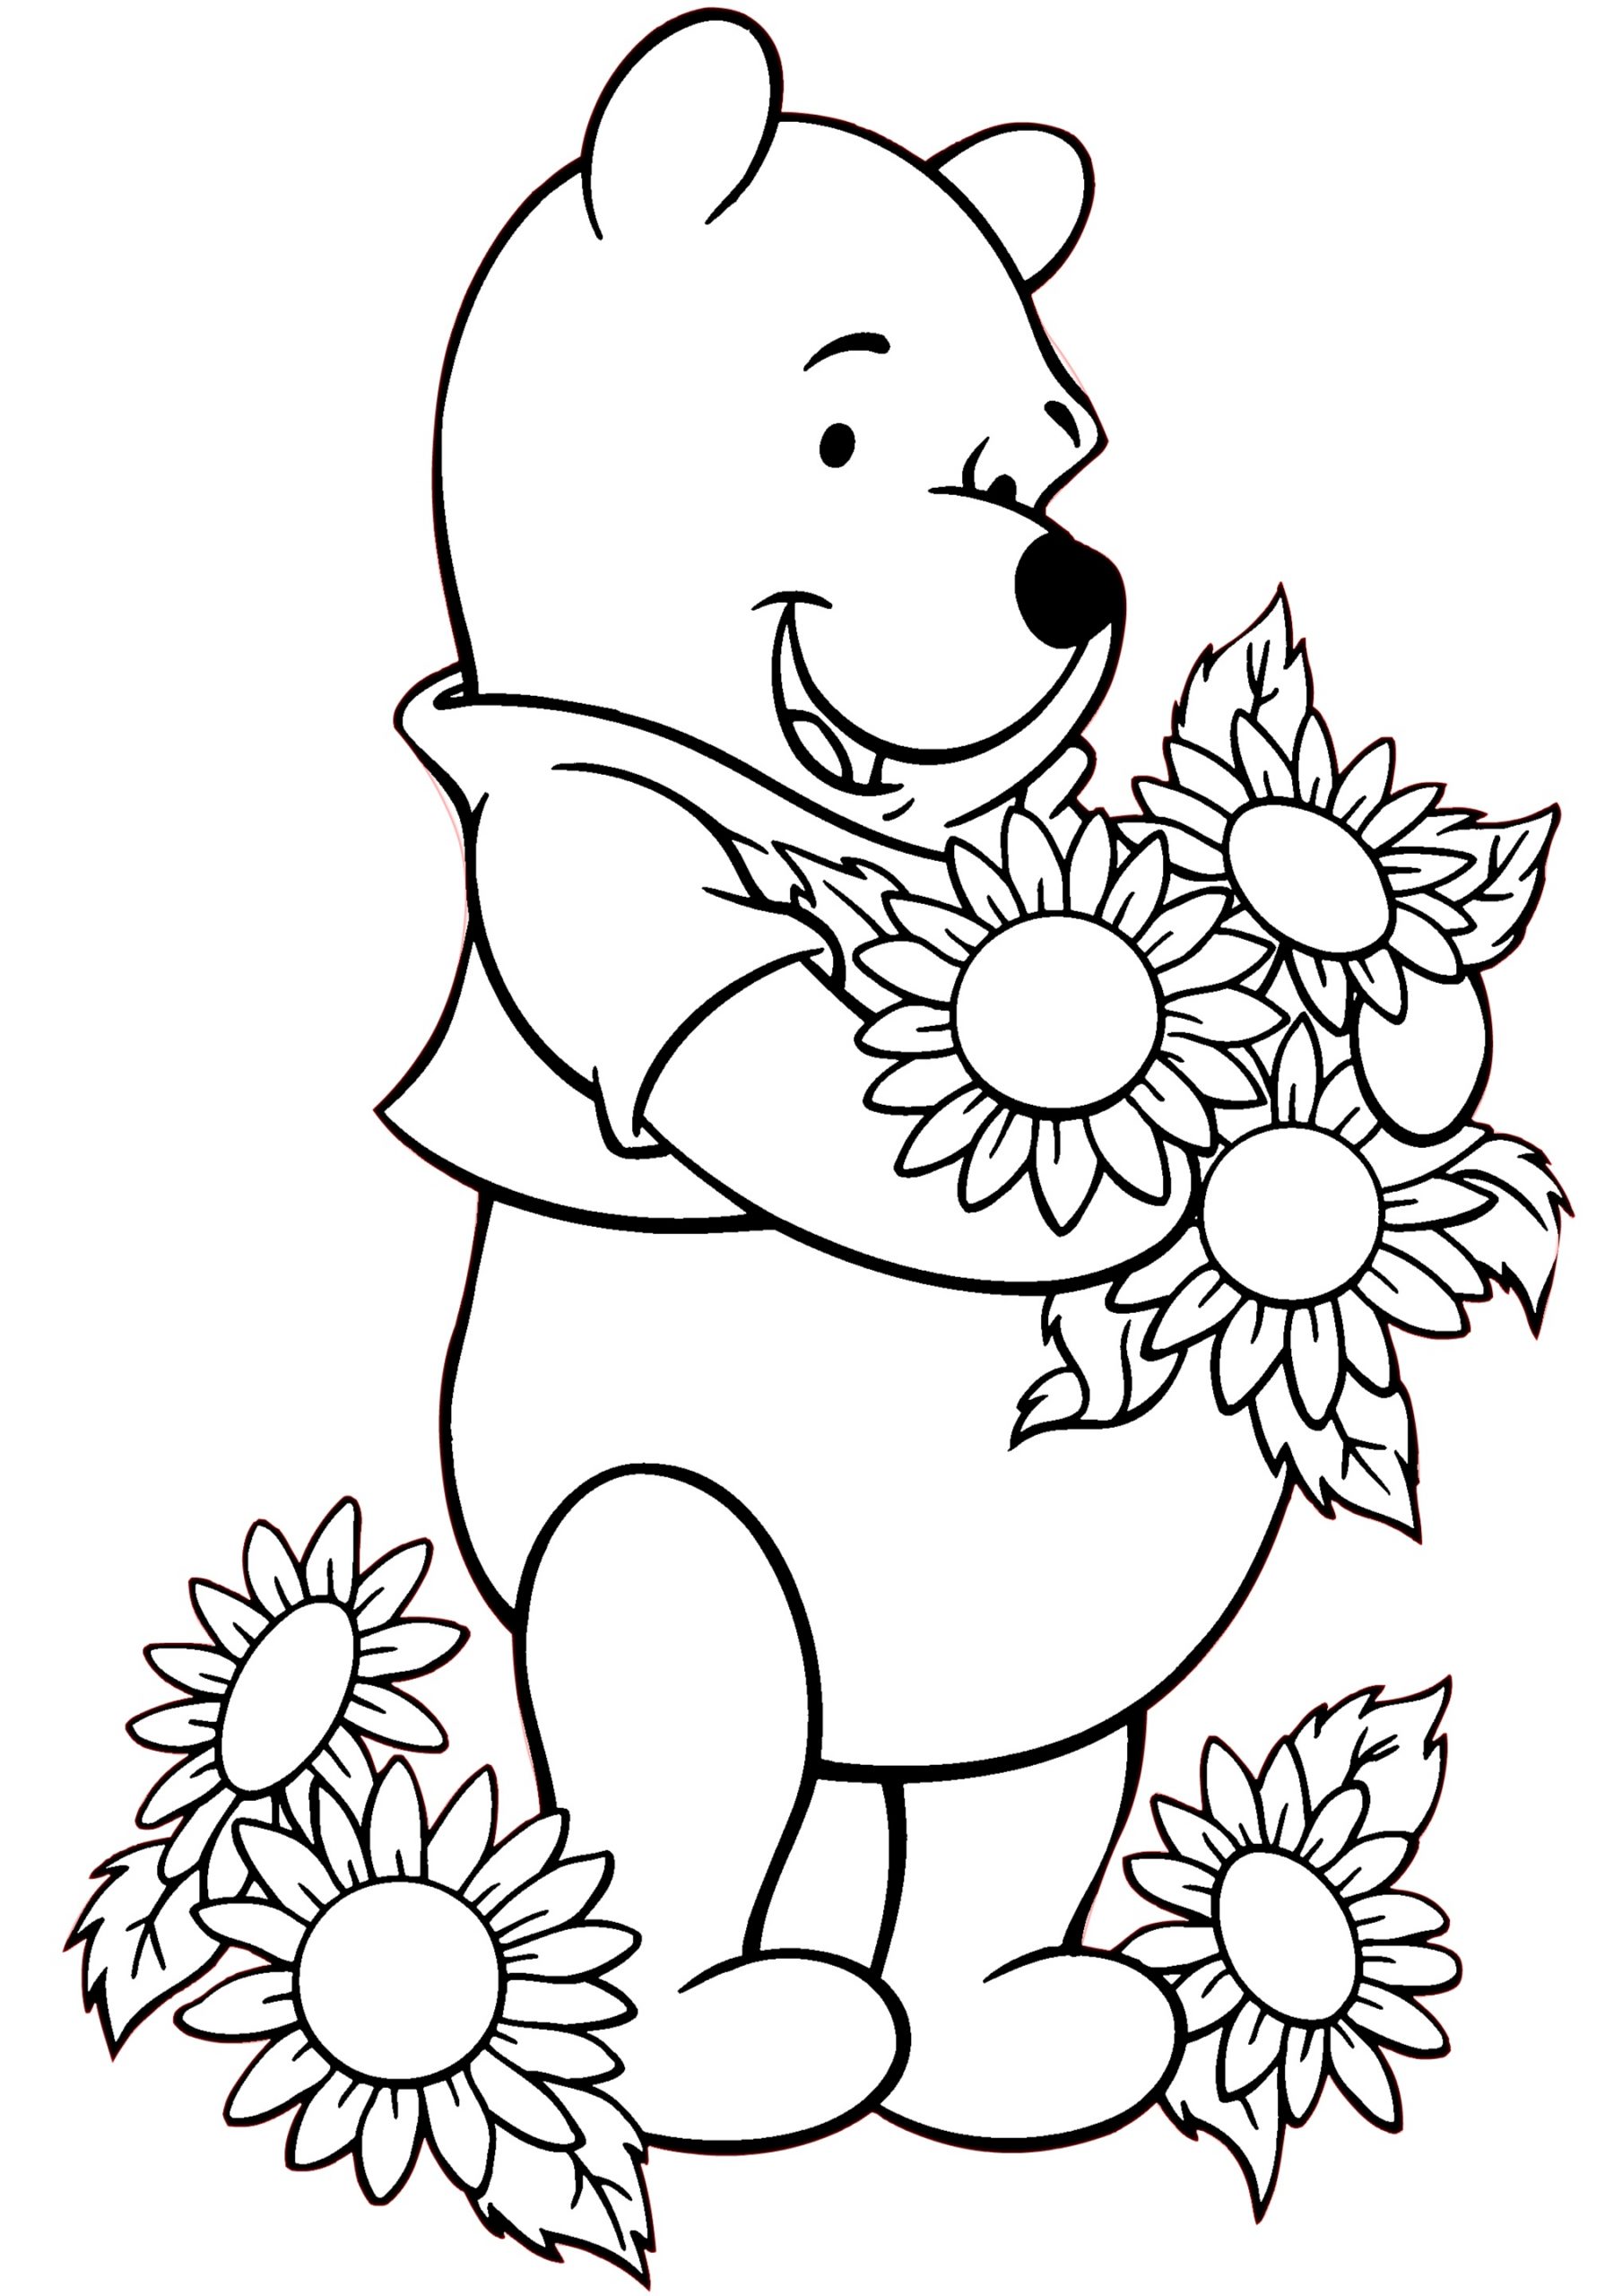 easy-printable-coloring-pages-walt-disney-printable-winnie-the-pooh-coloring-pages-easy-to-color